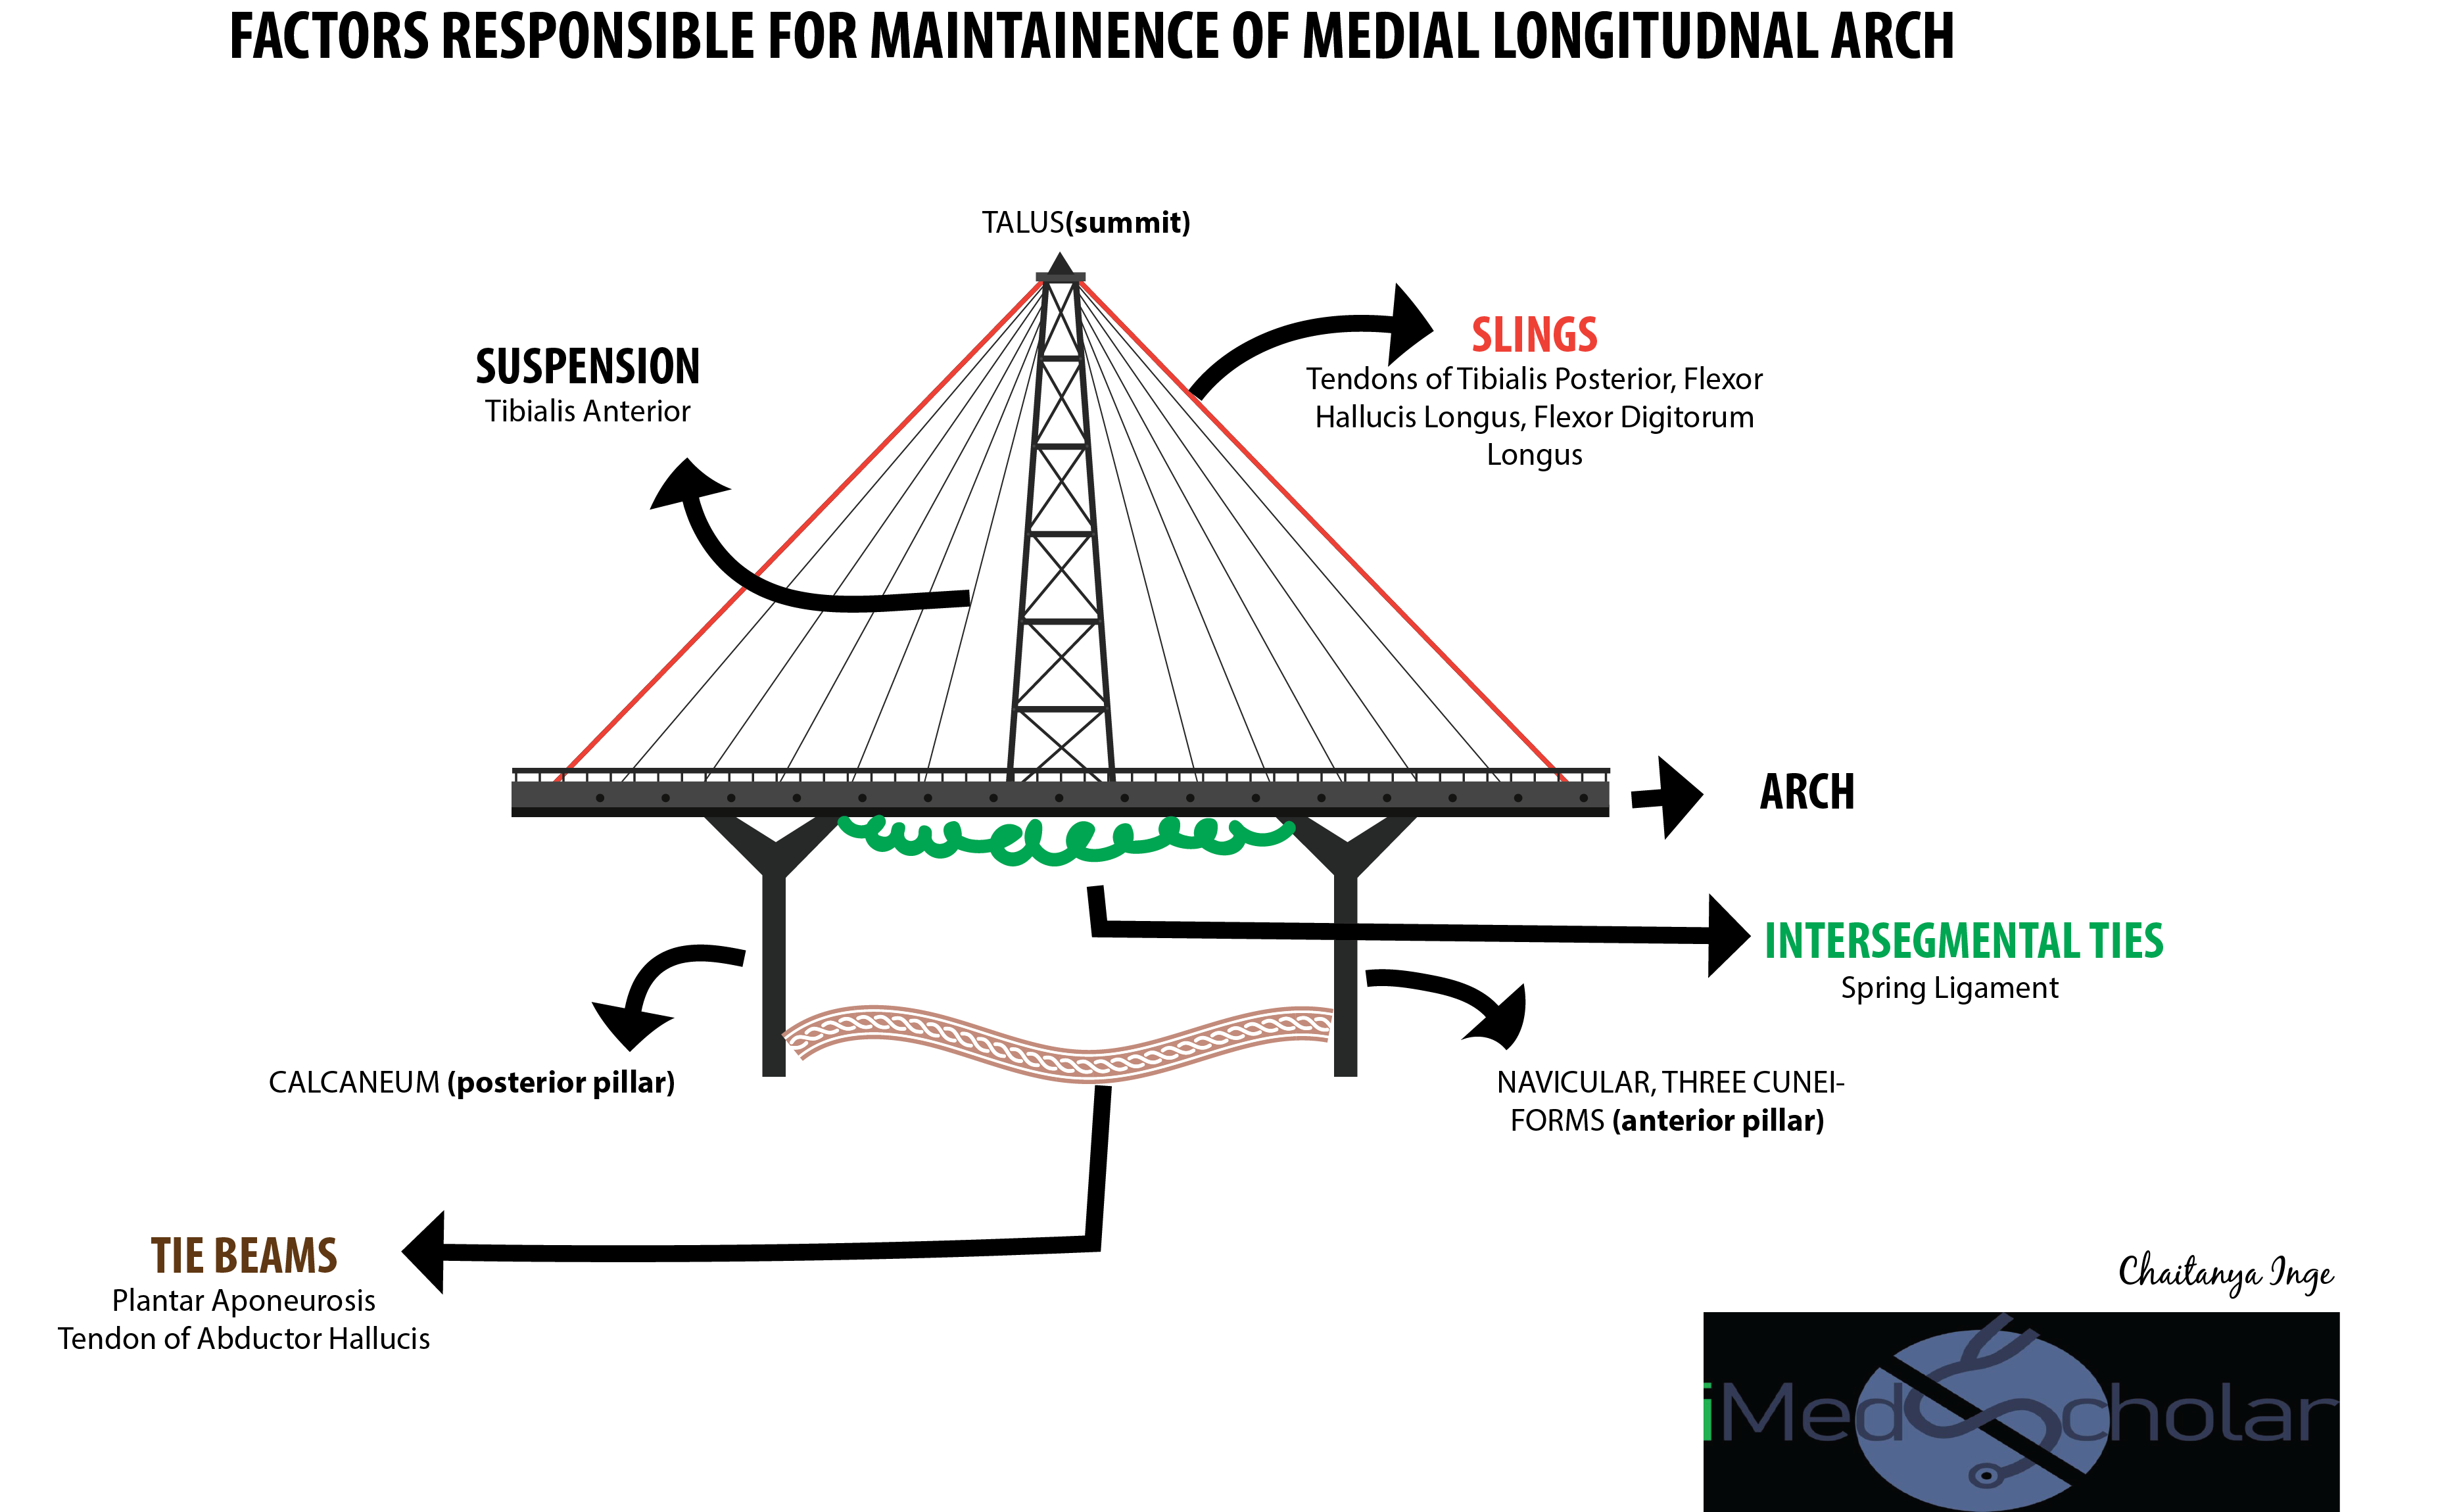 Factors responsible for maintenance of medial longitudinal arch